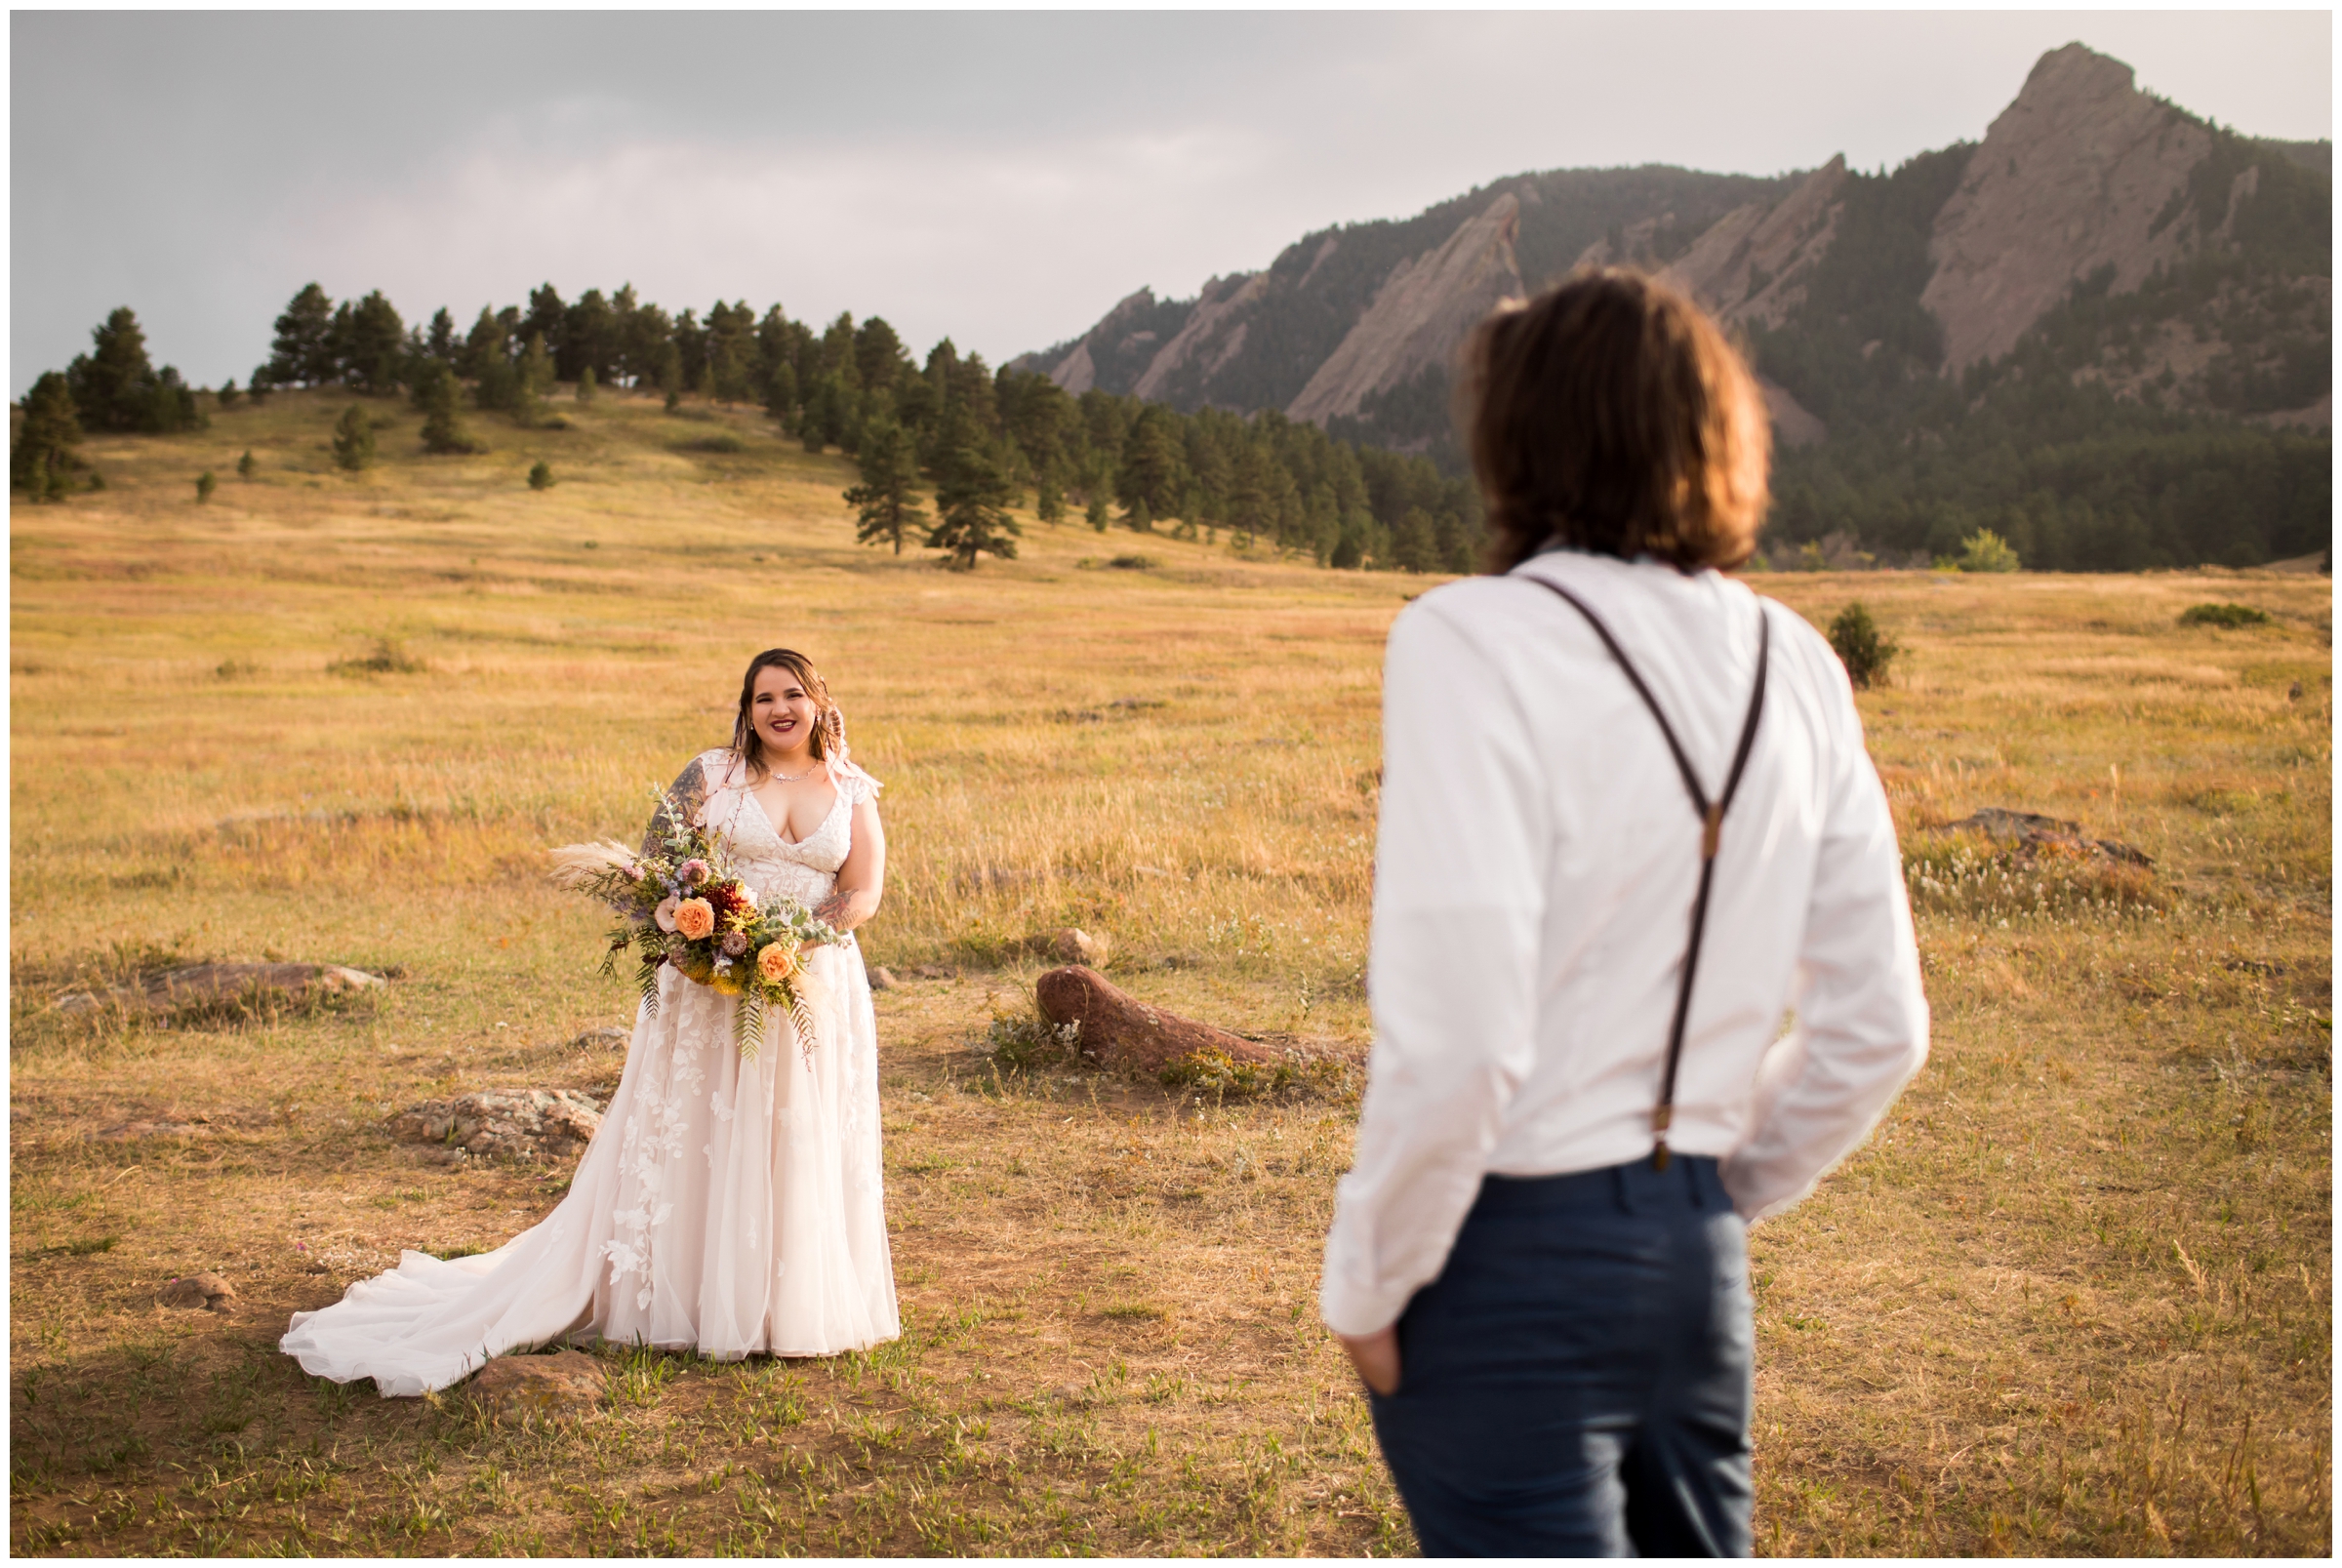 Chautauqua wedding photos by Boulder photographer Plum Pretty Photography